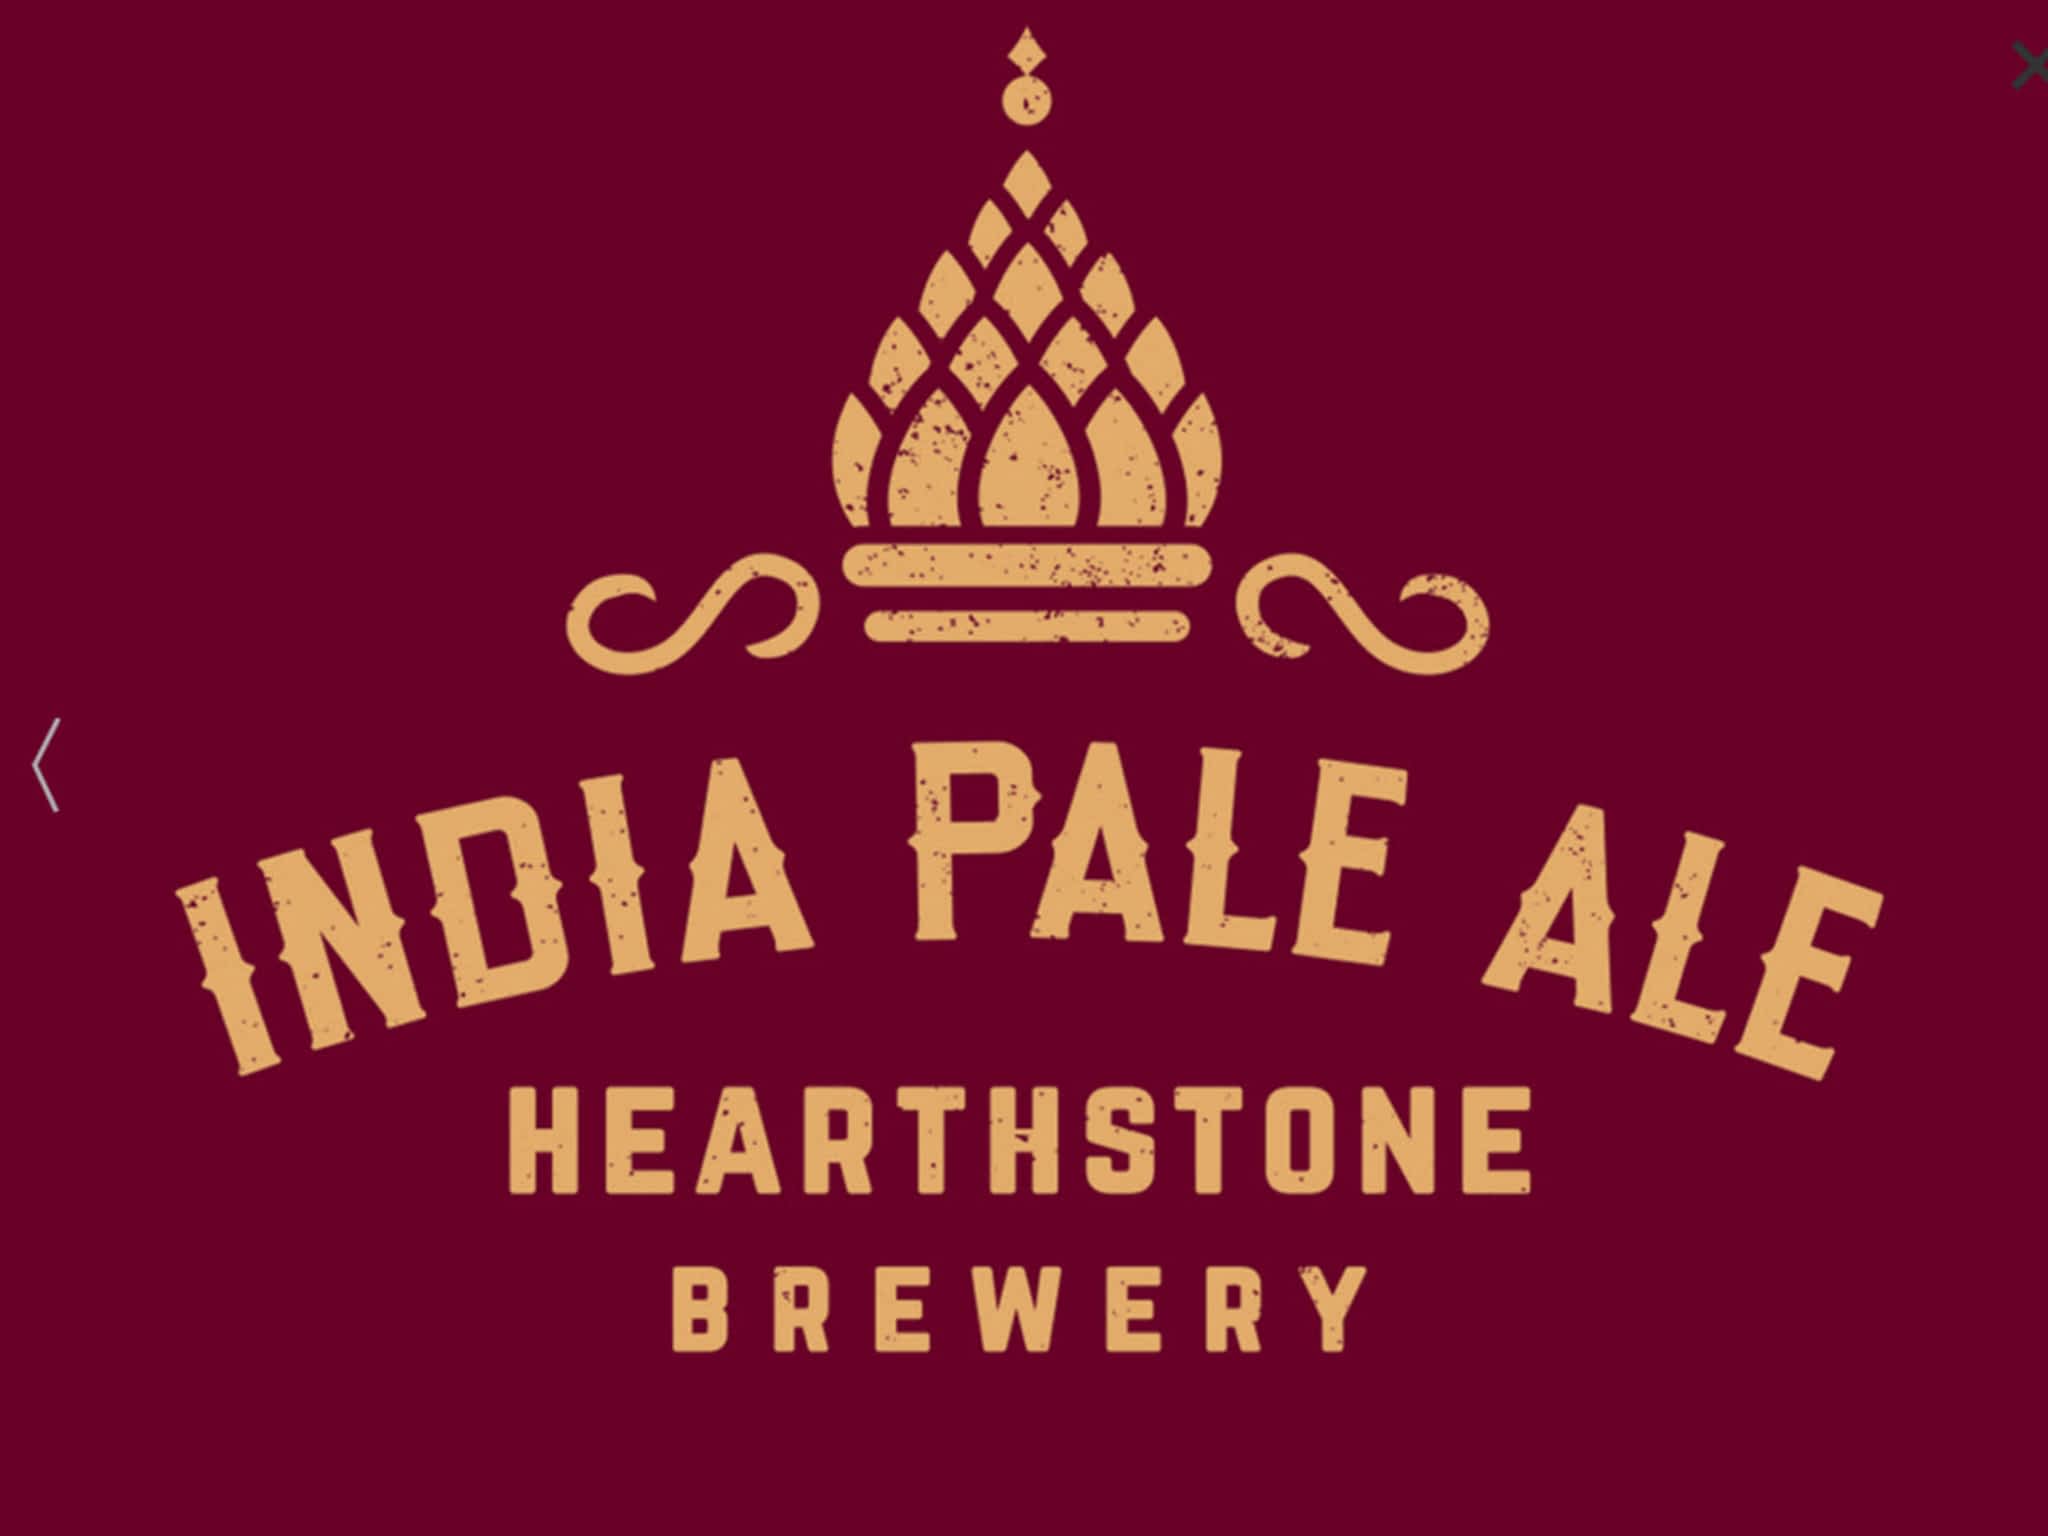 photo Hearthstone Brewery